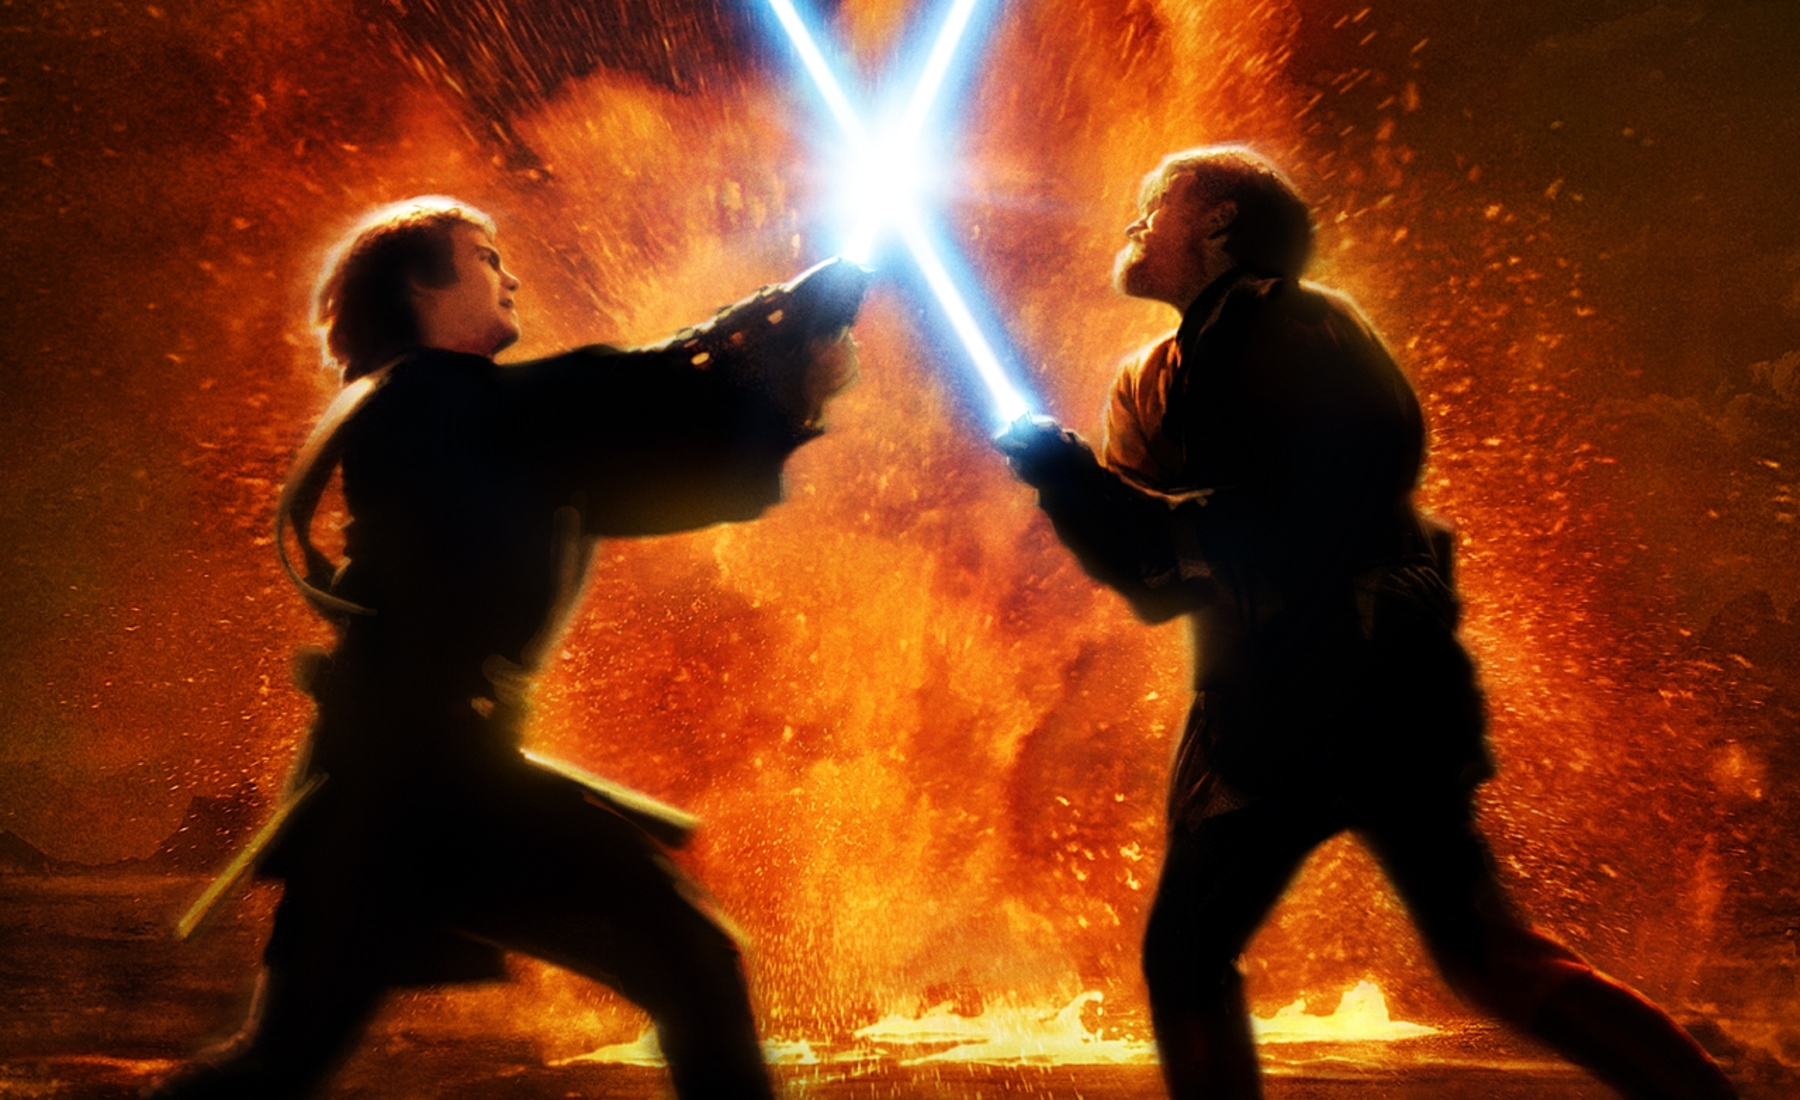 Who is More Powerful: Obi-Wan or Anakin?